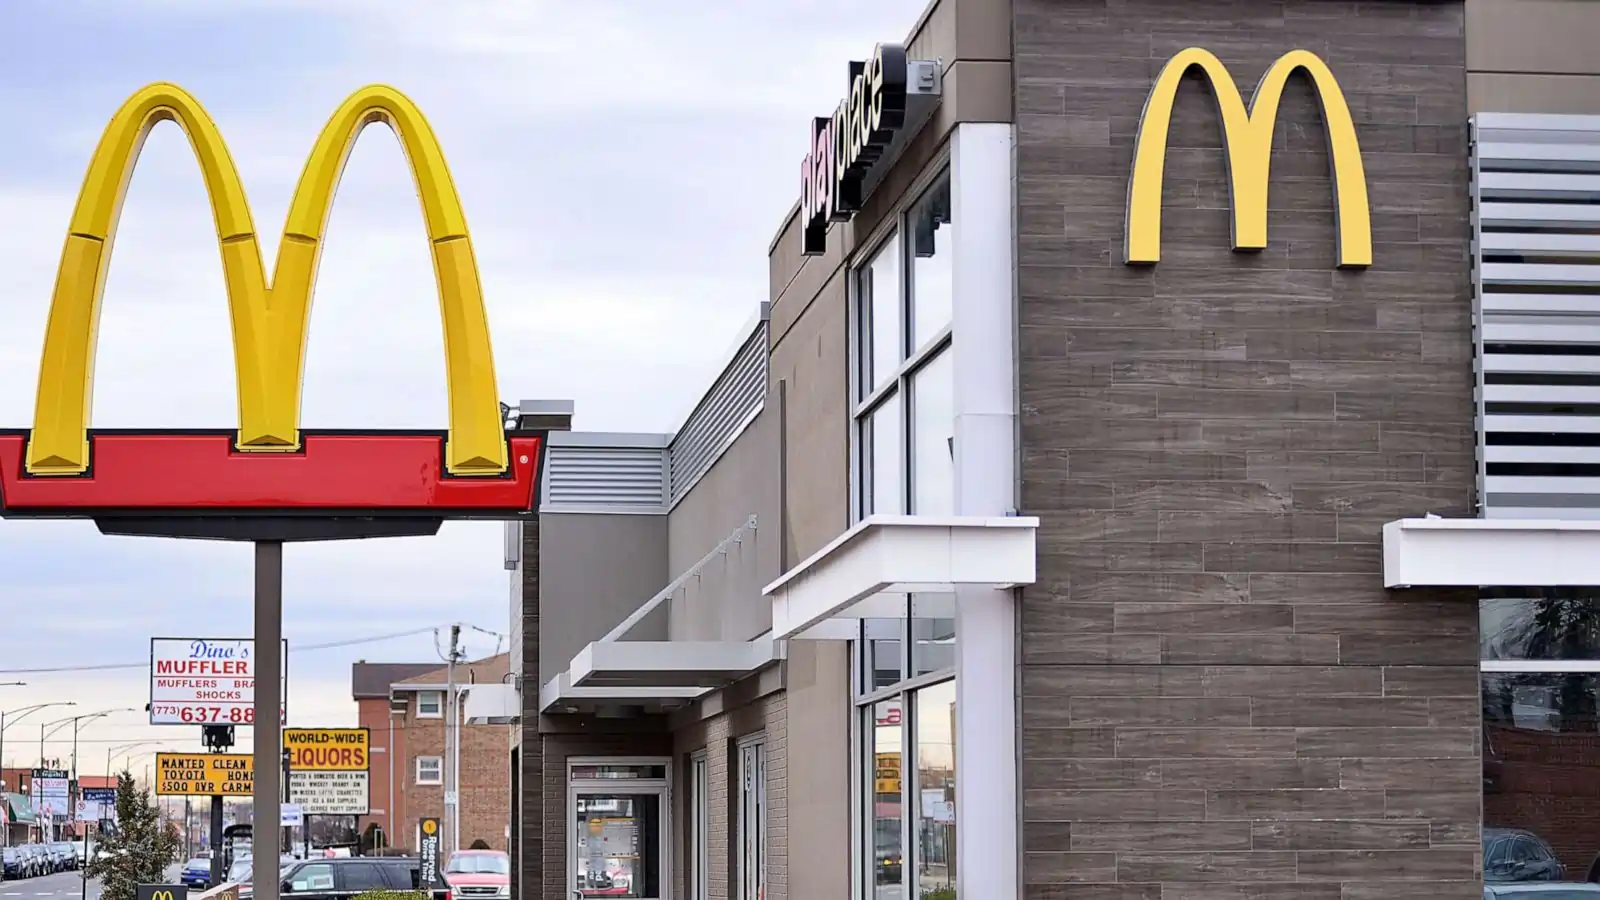 McDonald's franchisee group pushes back against 'detrimental' fee hike